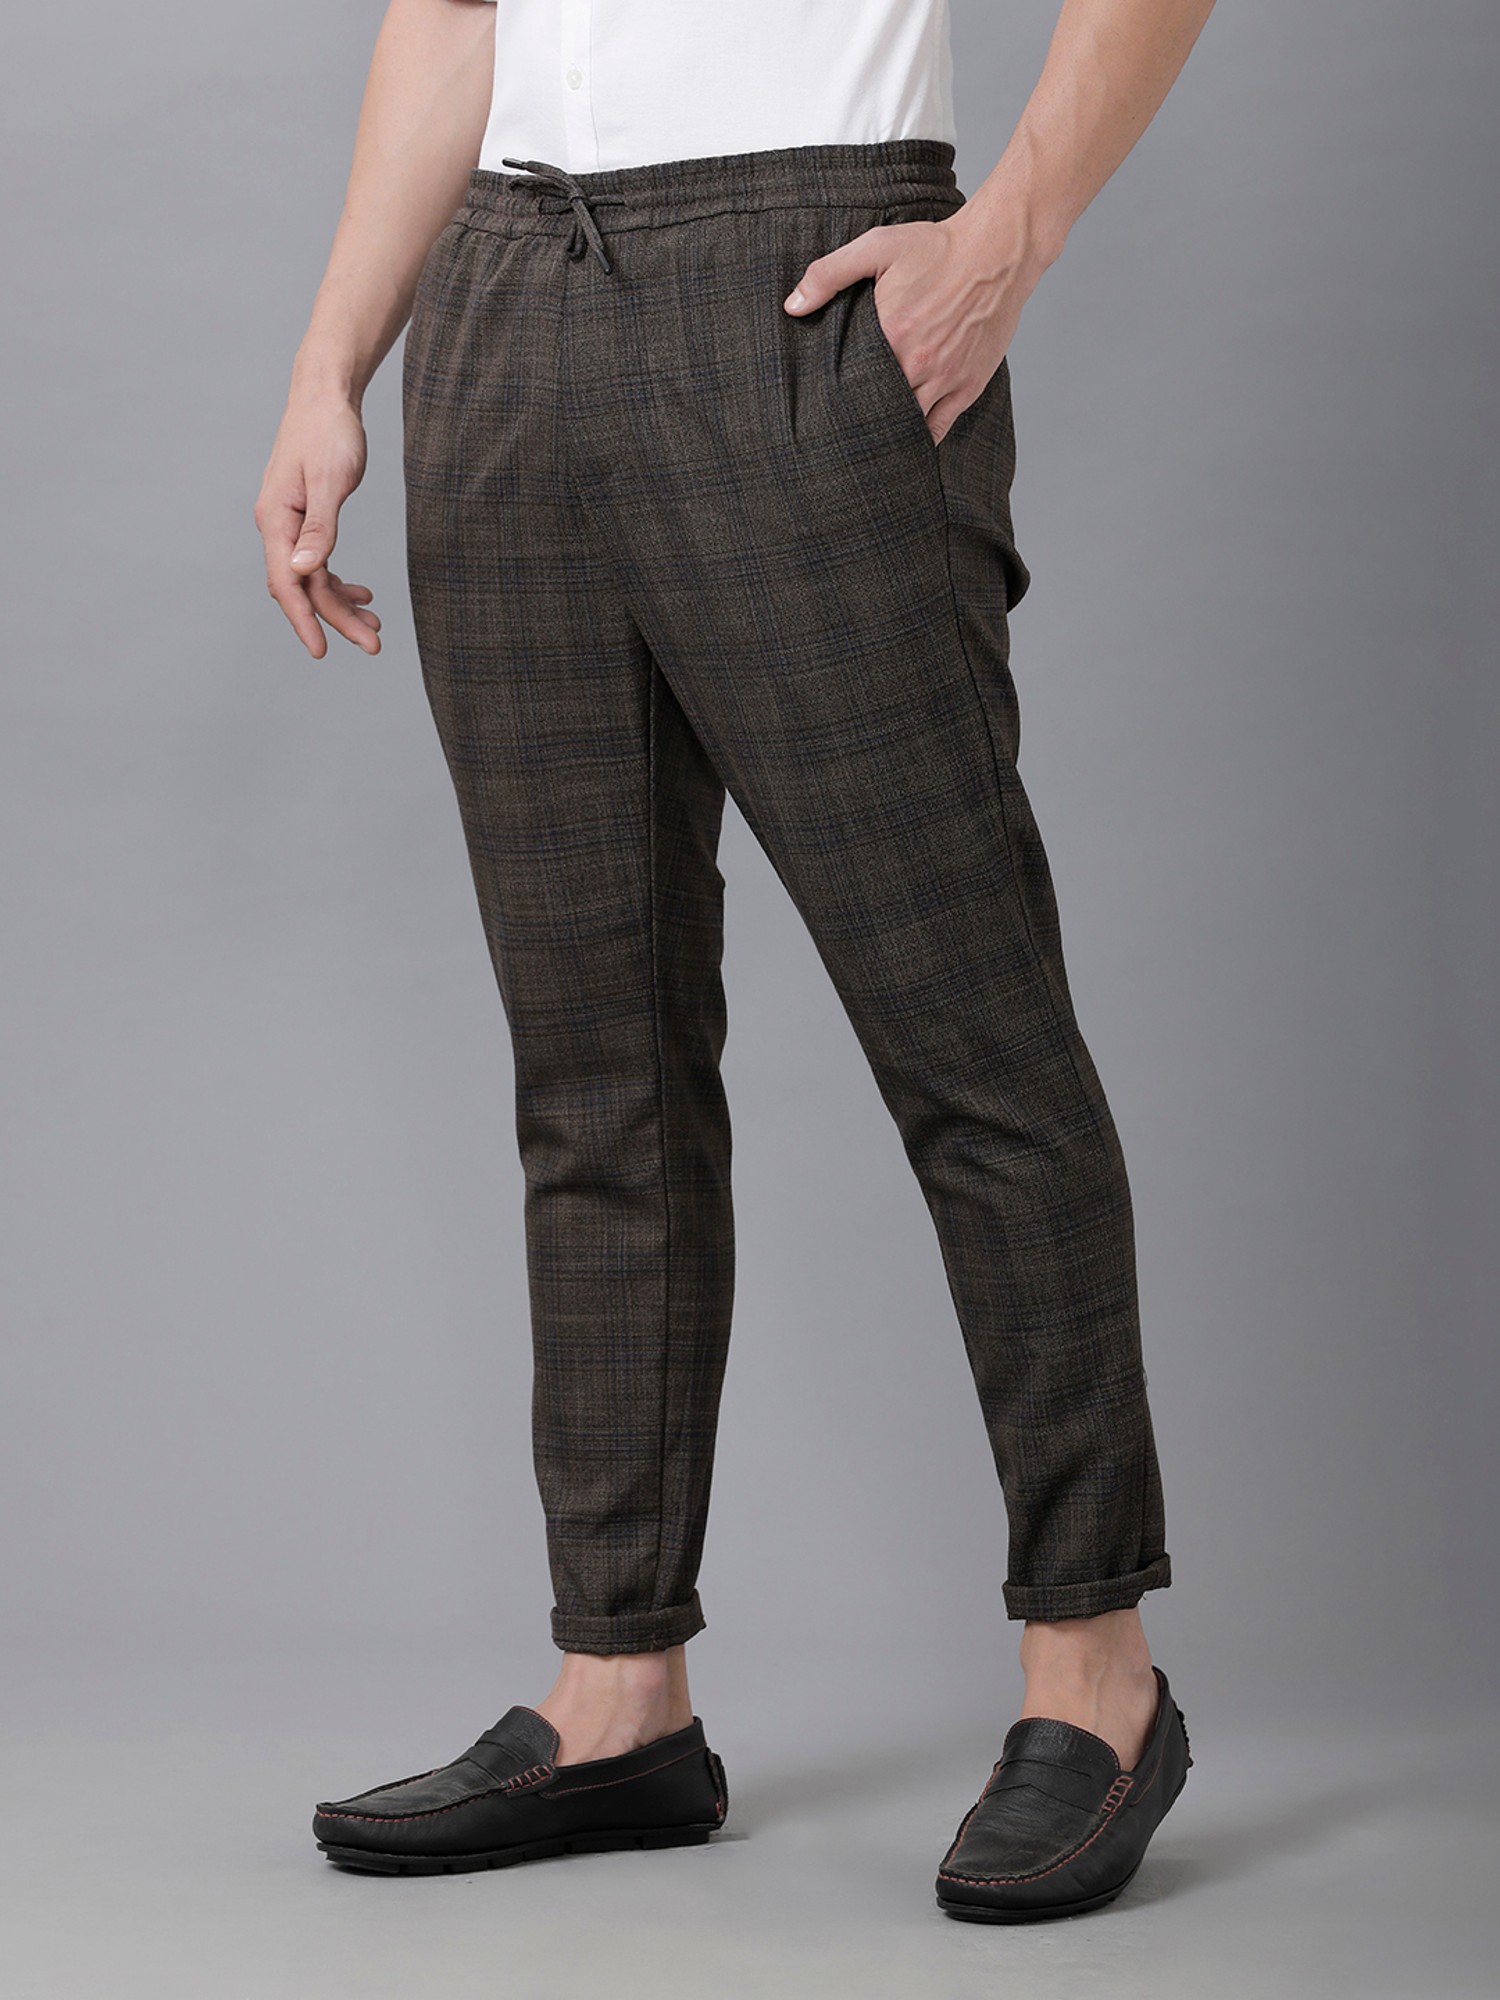 Buy Identiti Brown Slim Fit Track Pants for Men's Online @ Tata CLiQ